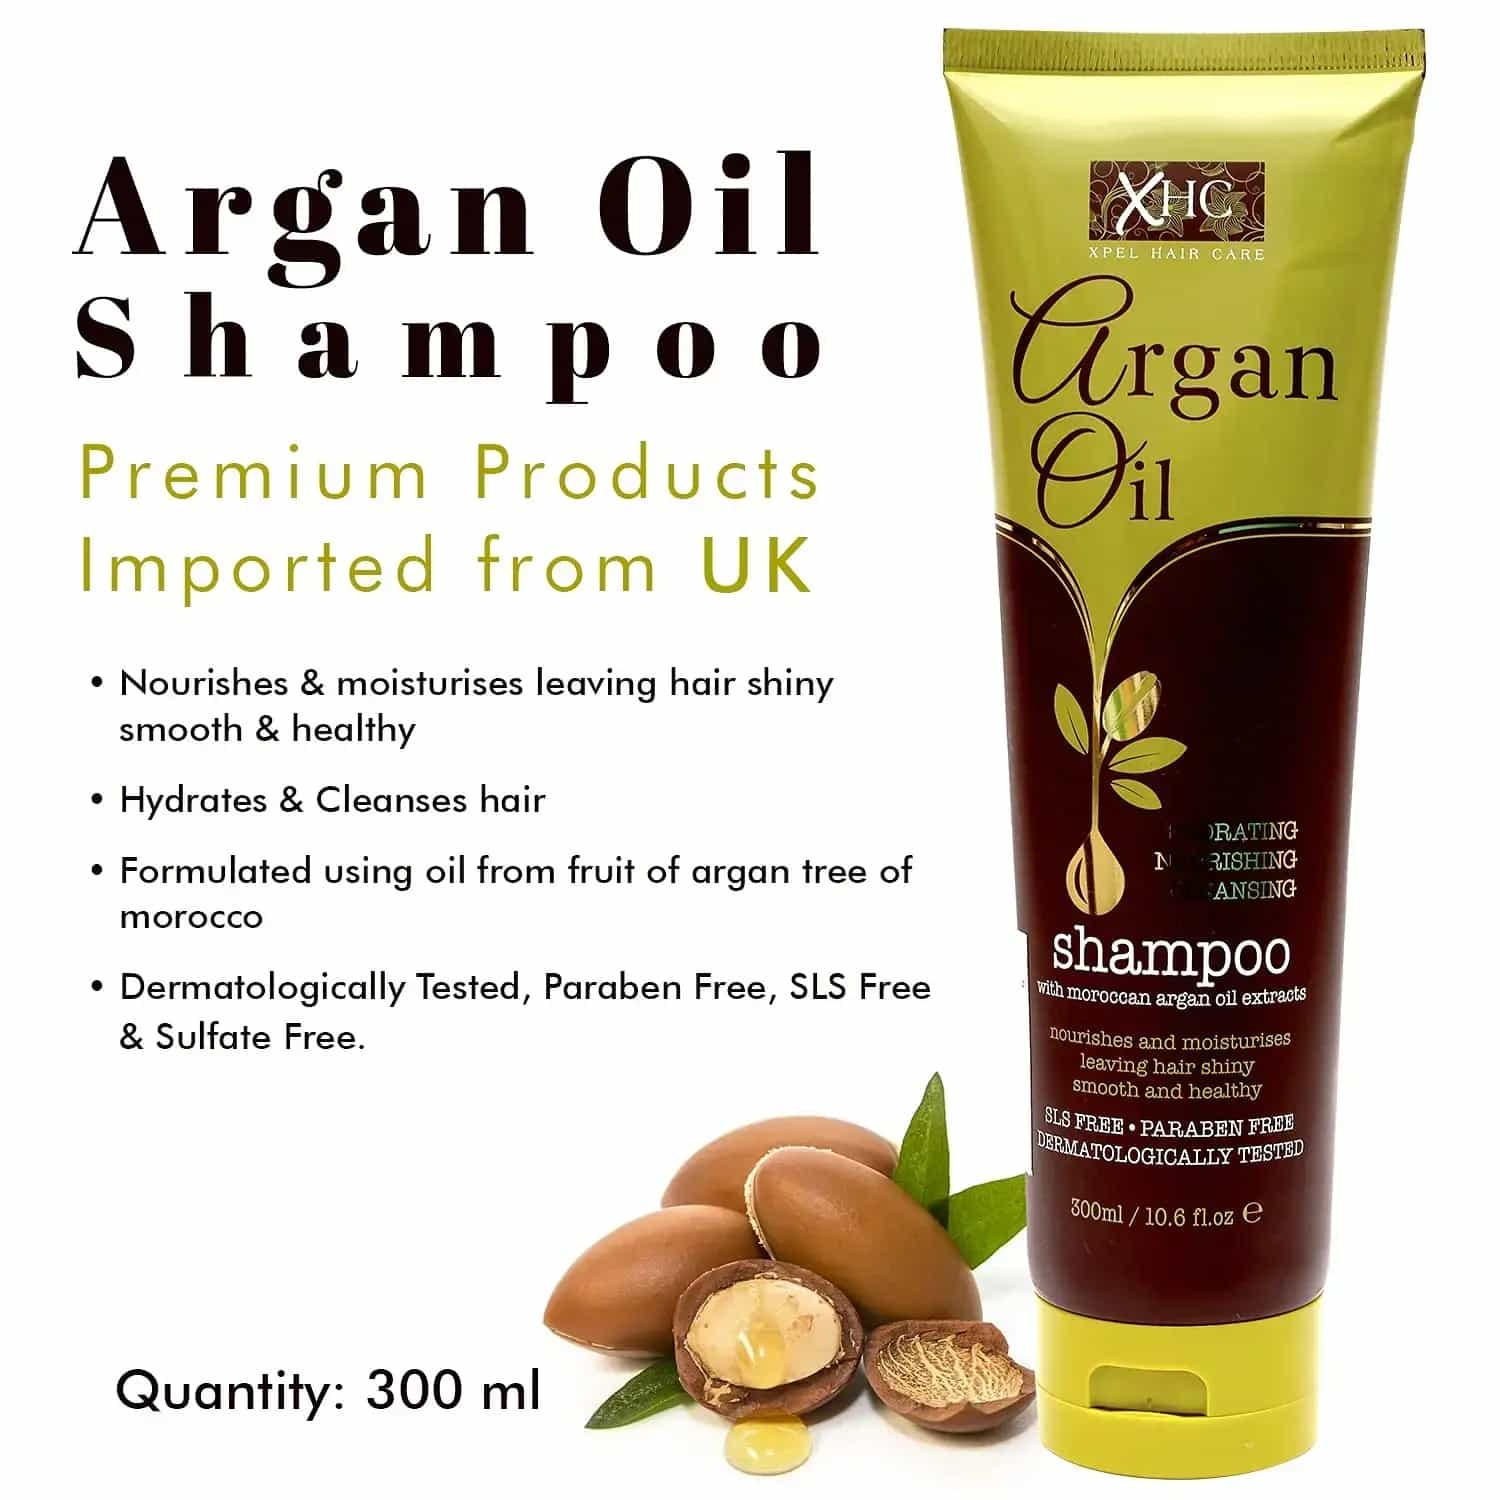 XHC Argan Oil Shampoo price in Bangladesh